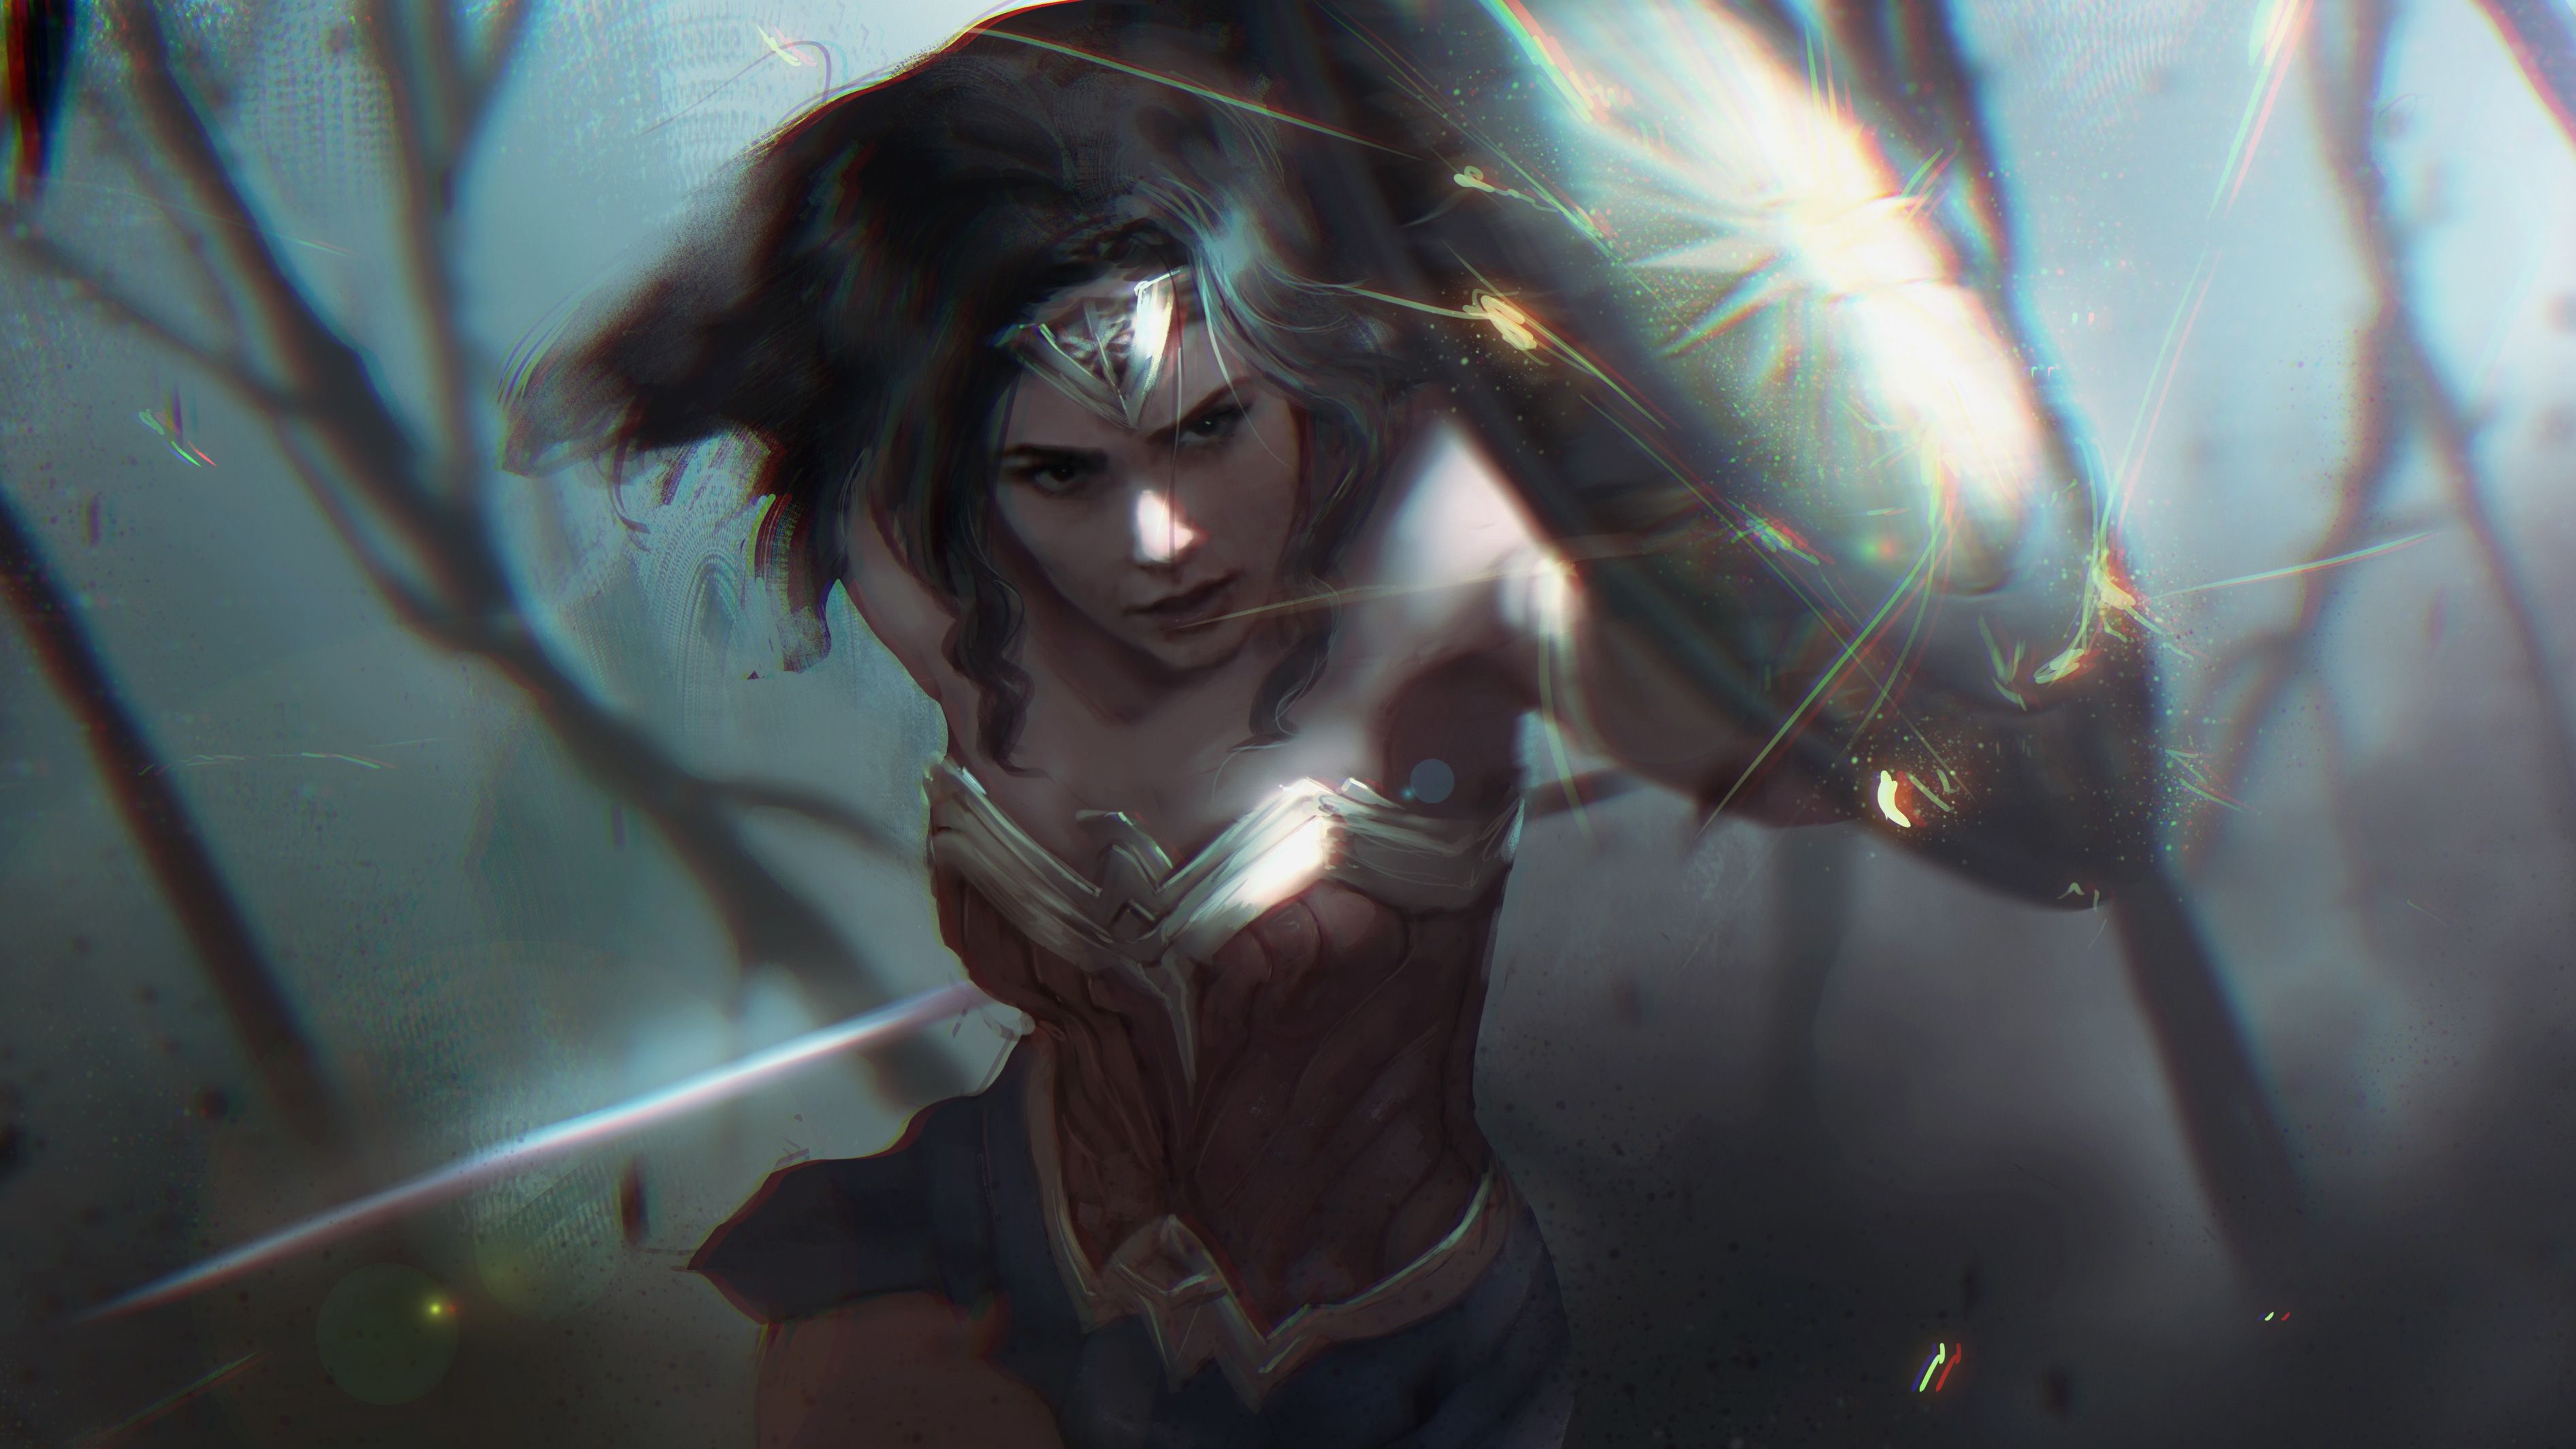 Wonder Woman 4k Digital Art, HD Superheroes, 4k Wallpaper, Image, Background, Photo and Picture